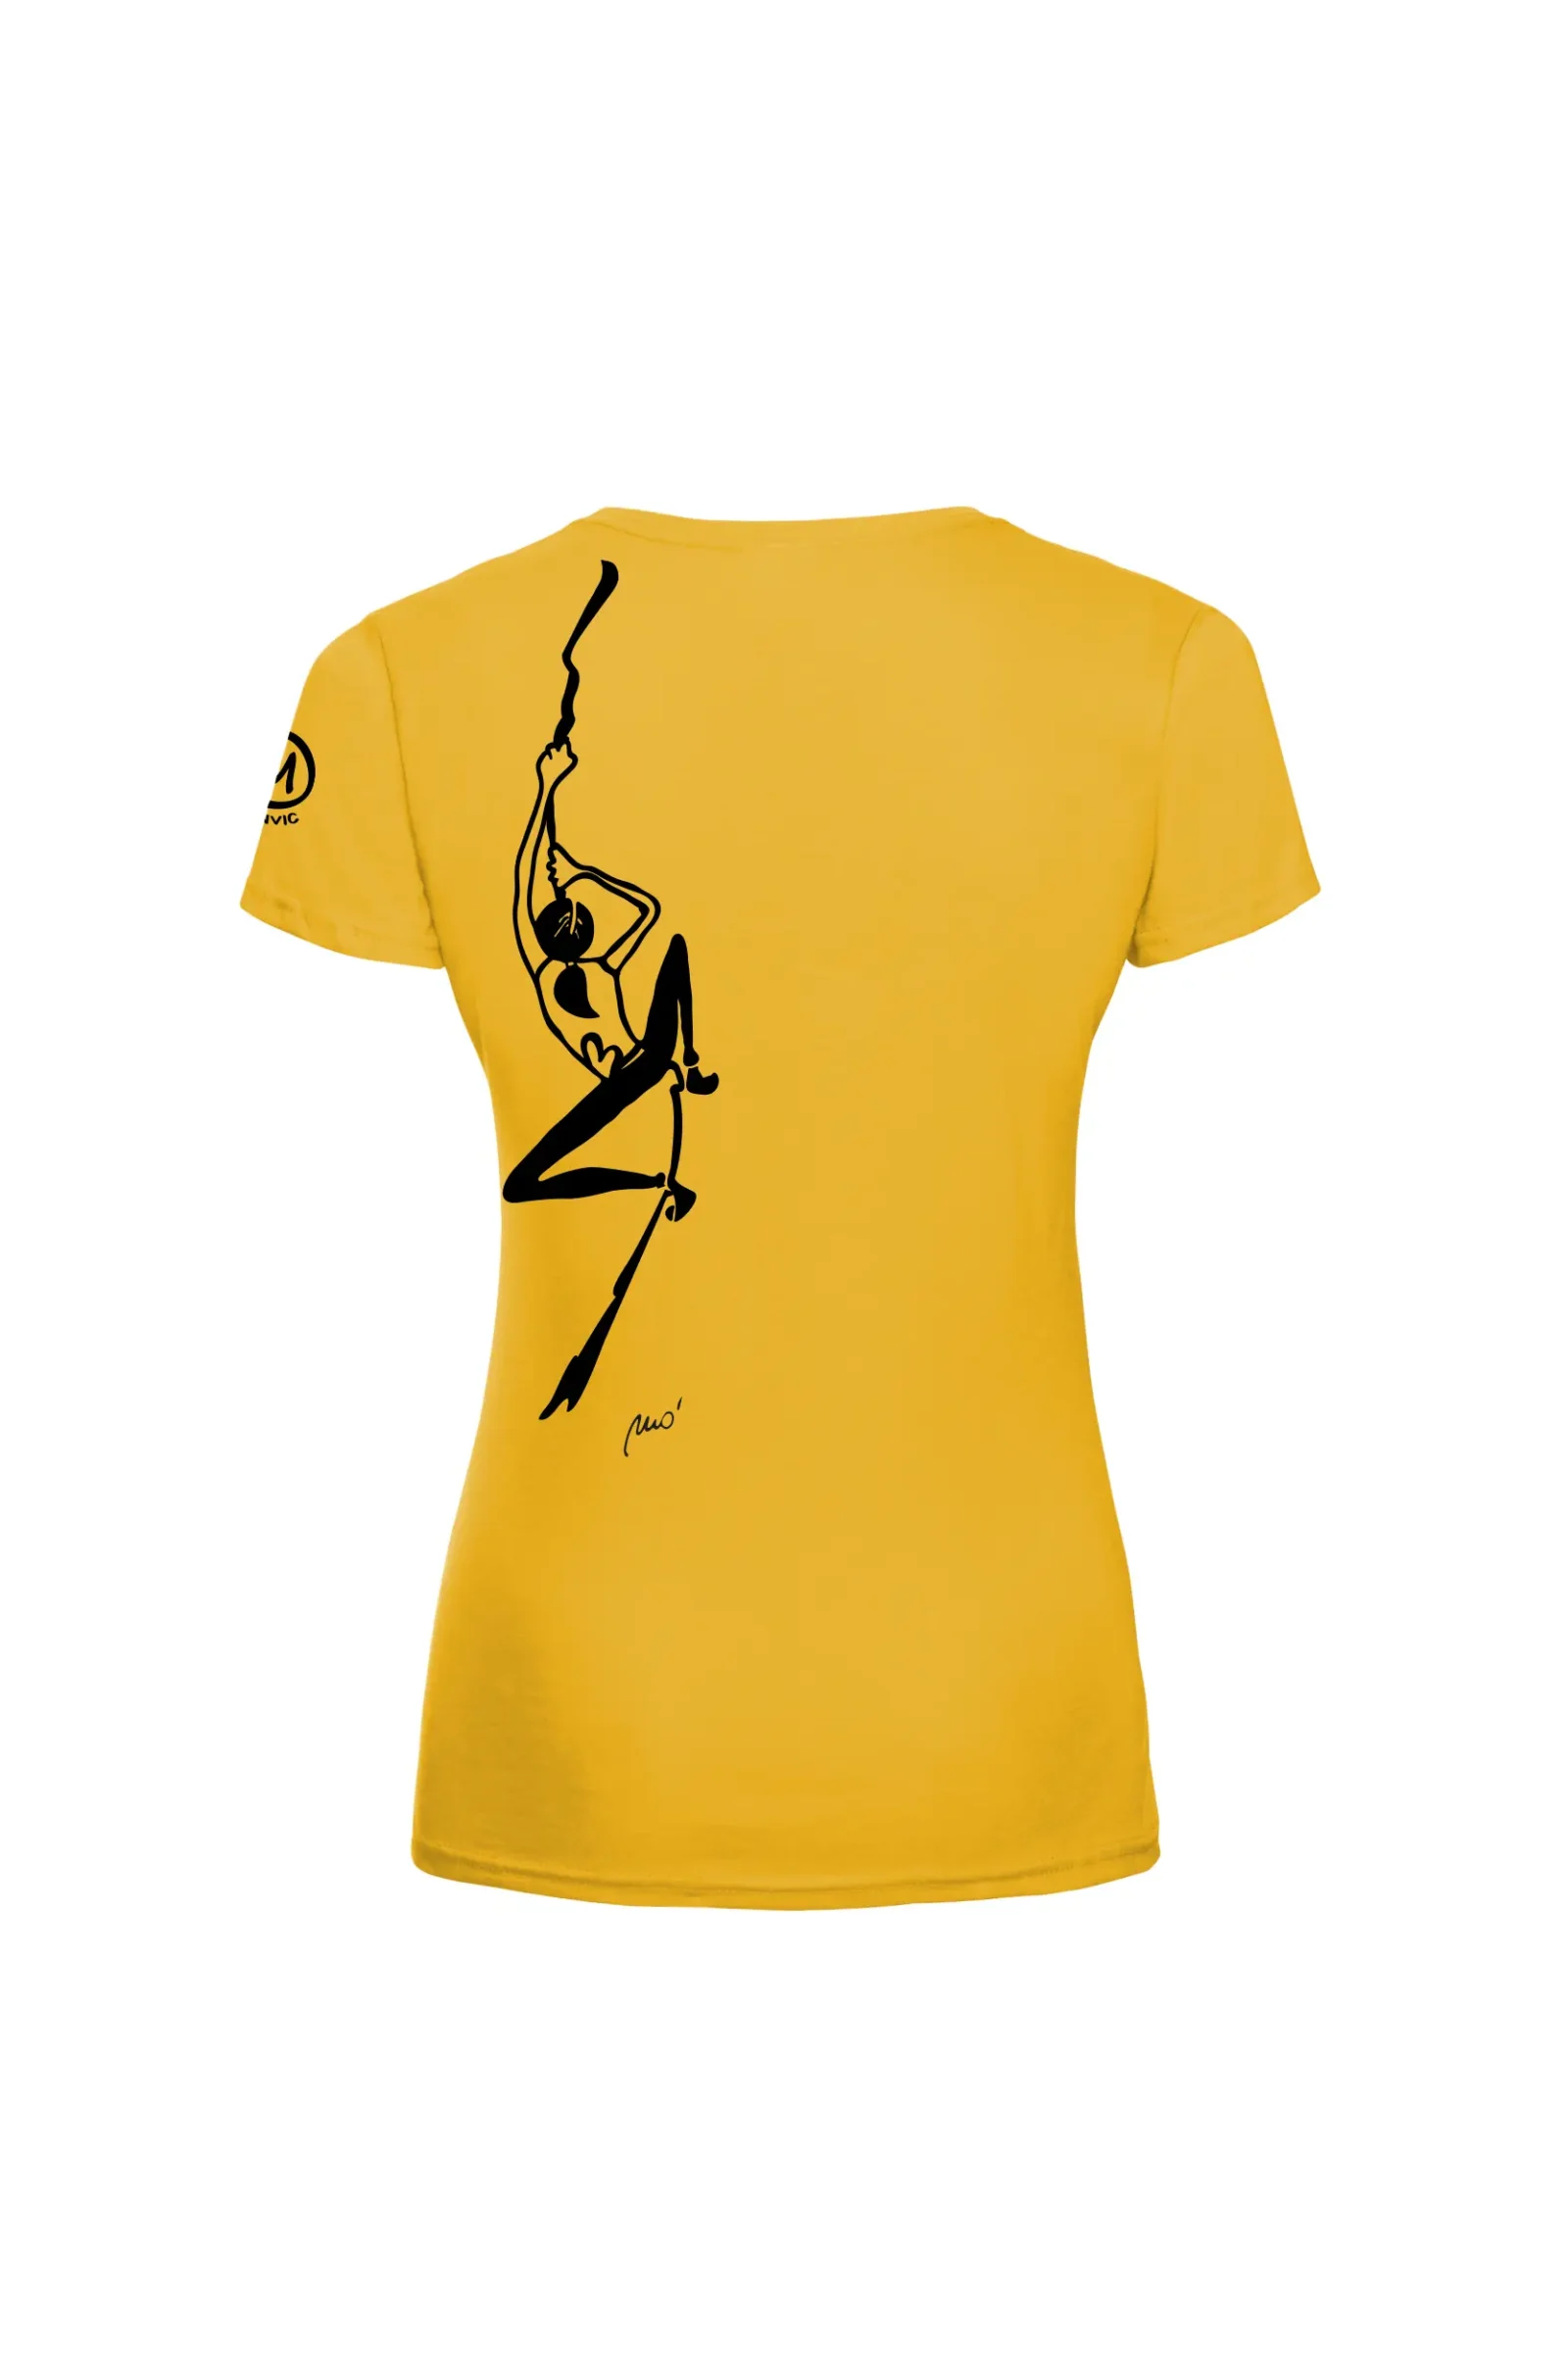 Women's climbing t-shirt - yellow cotton - "Sabry" graphic - SHARON by MONVIC